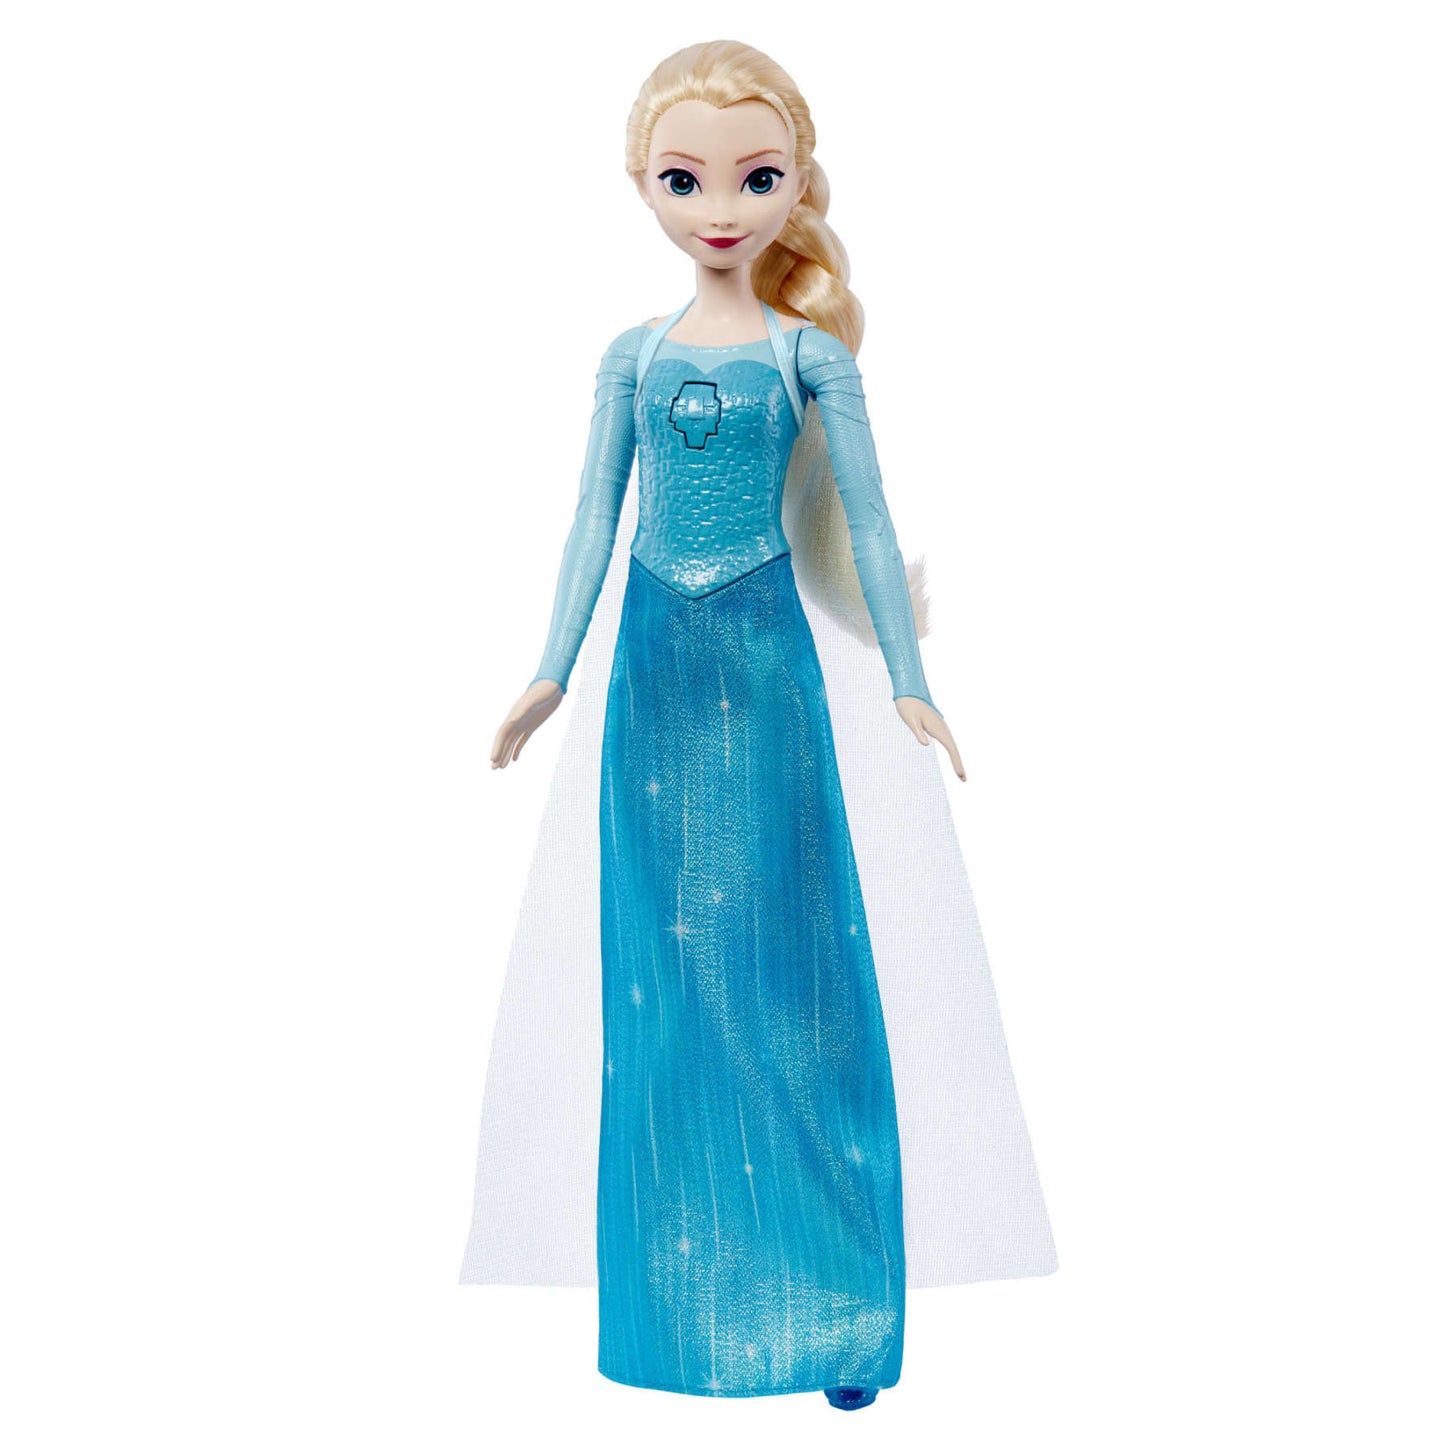 Disney Frozen - Musical Fashion Doll Elsa